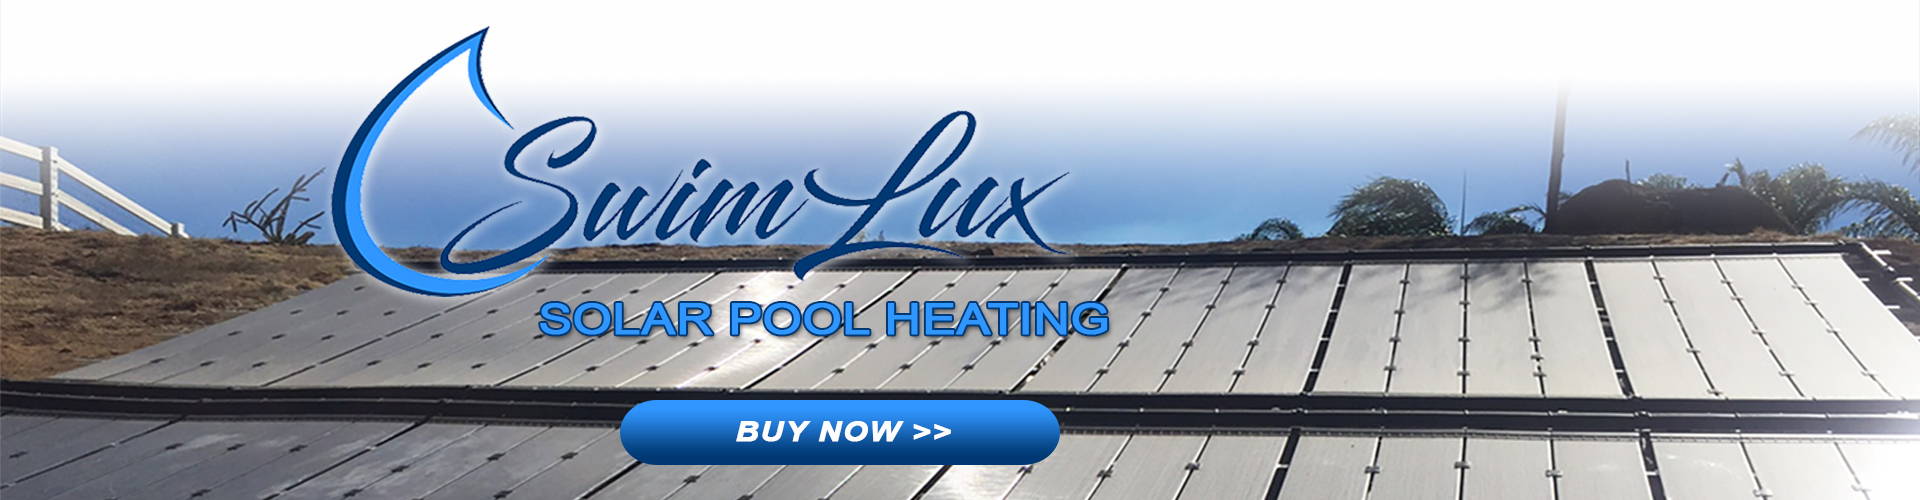 SwimLux Solar Pool Heating